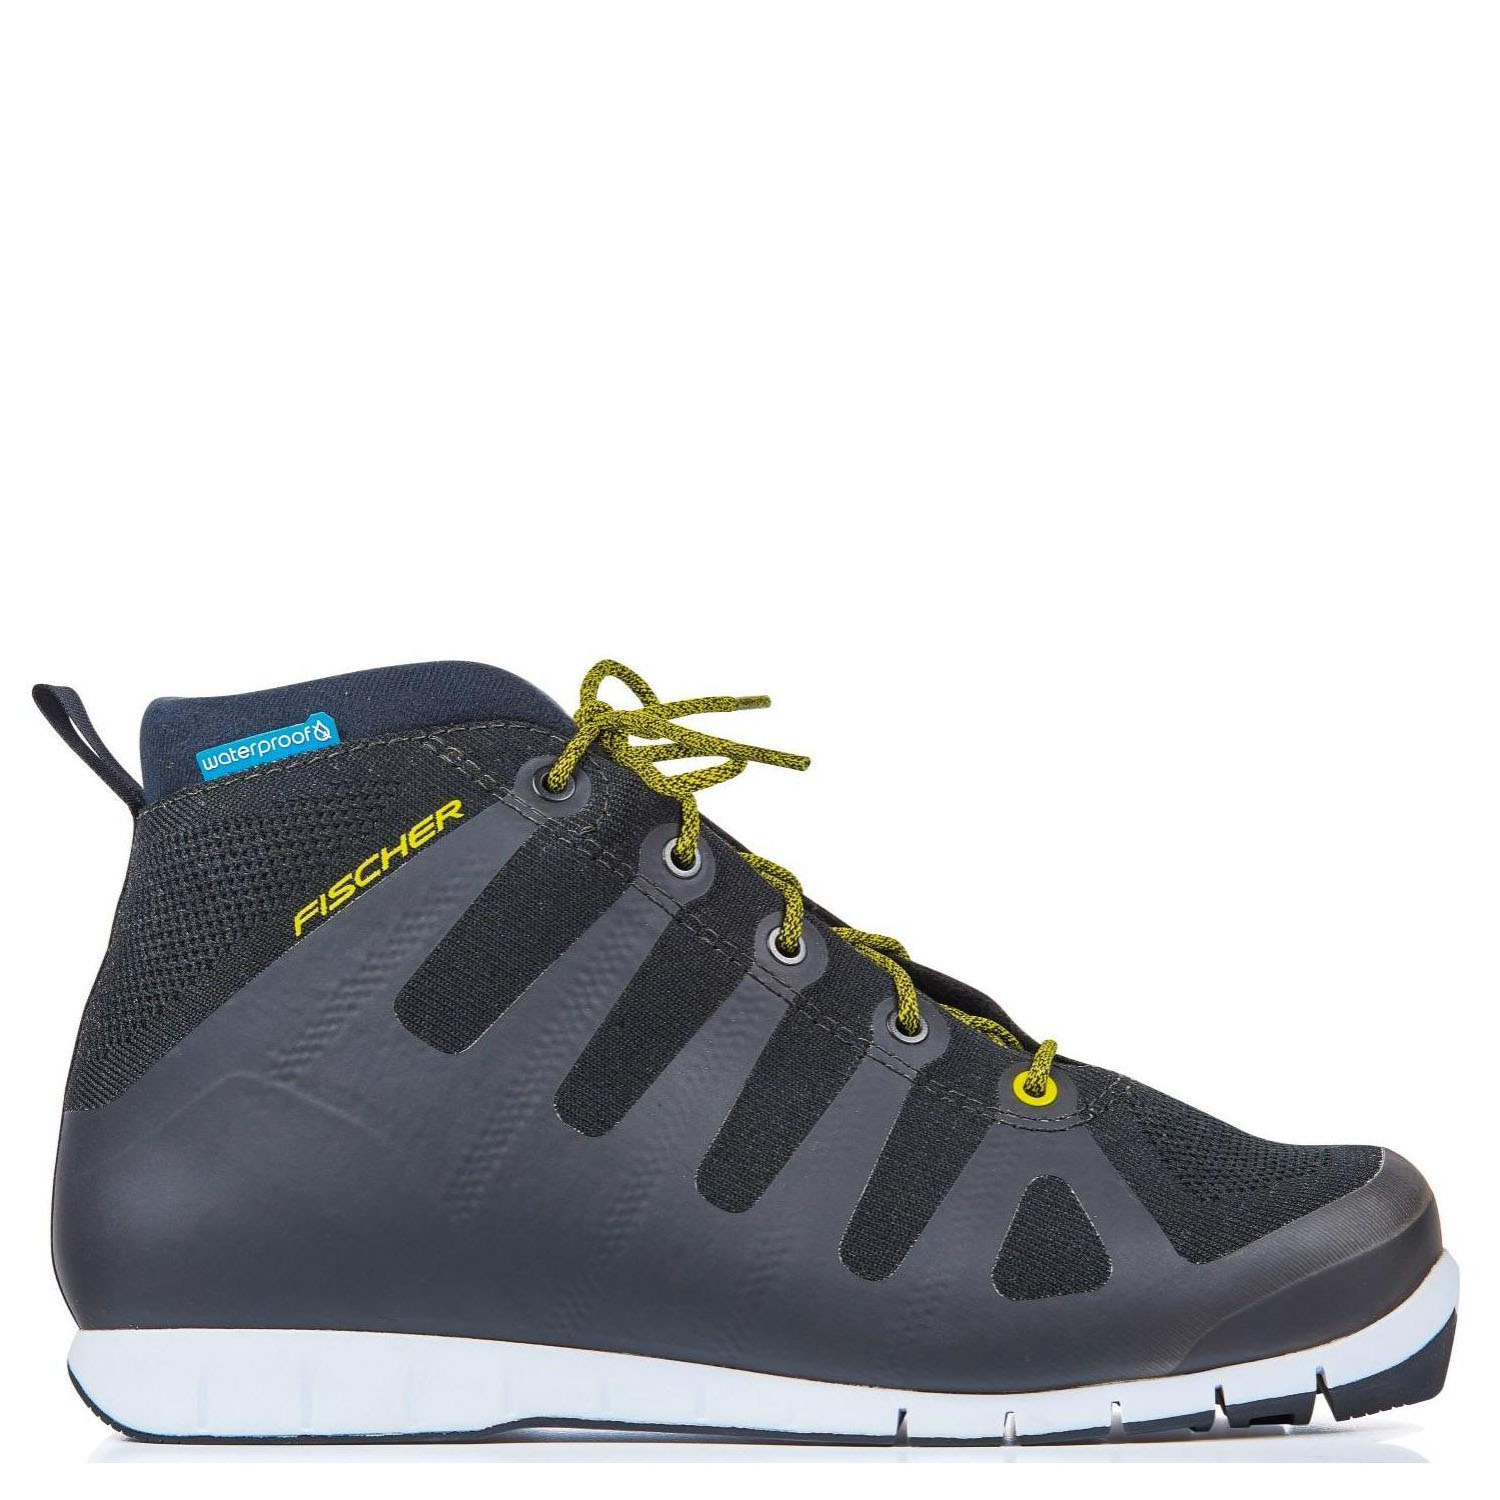 Лыжные ботинки FISCHER Urban Sport Black/Yellow